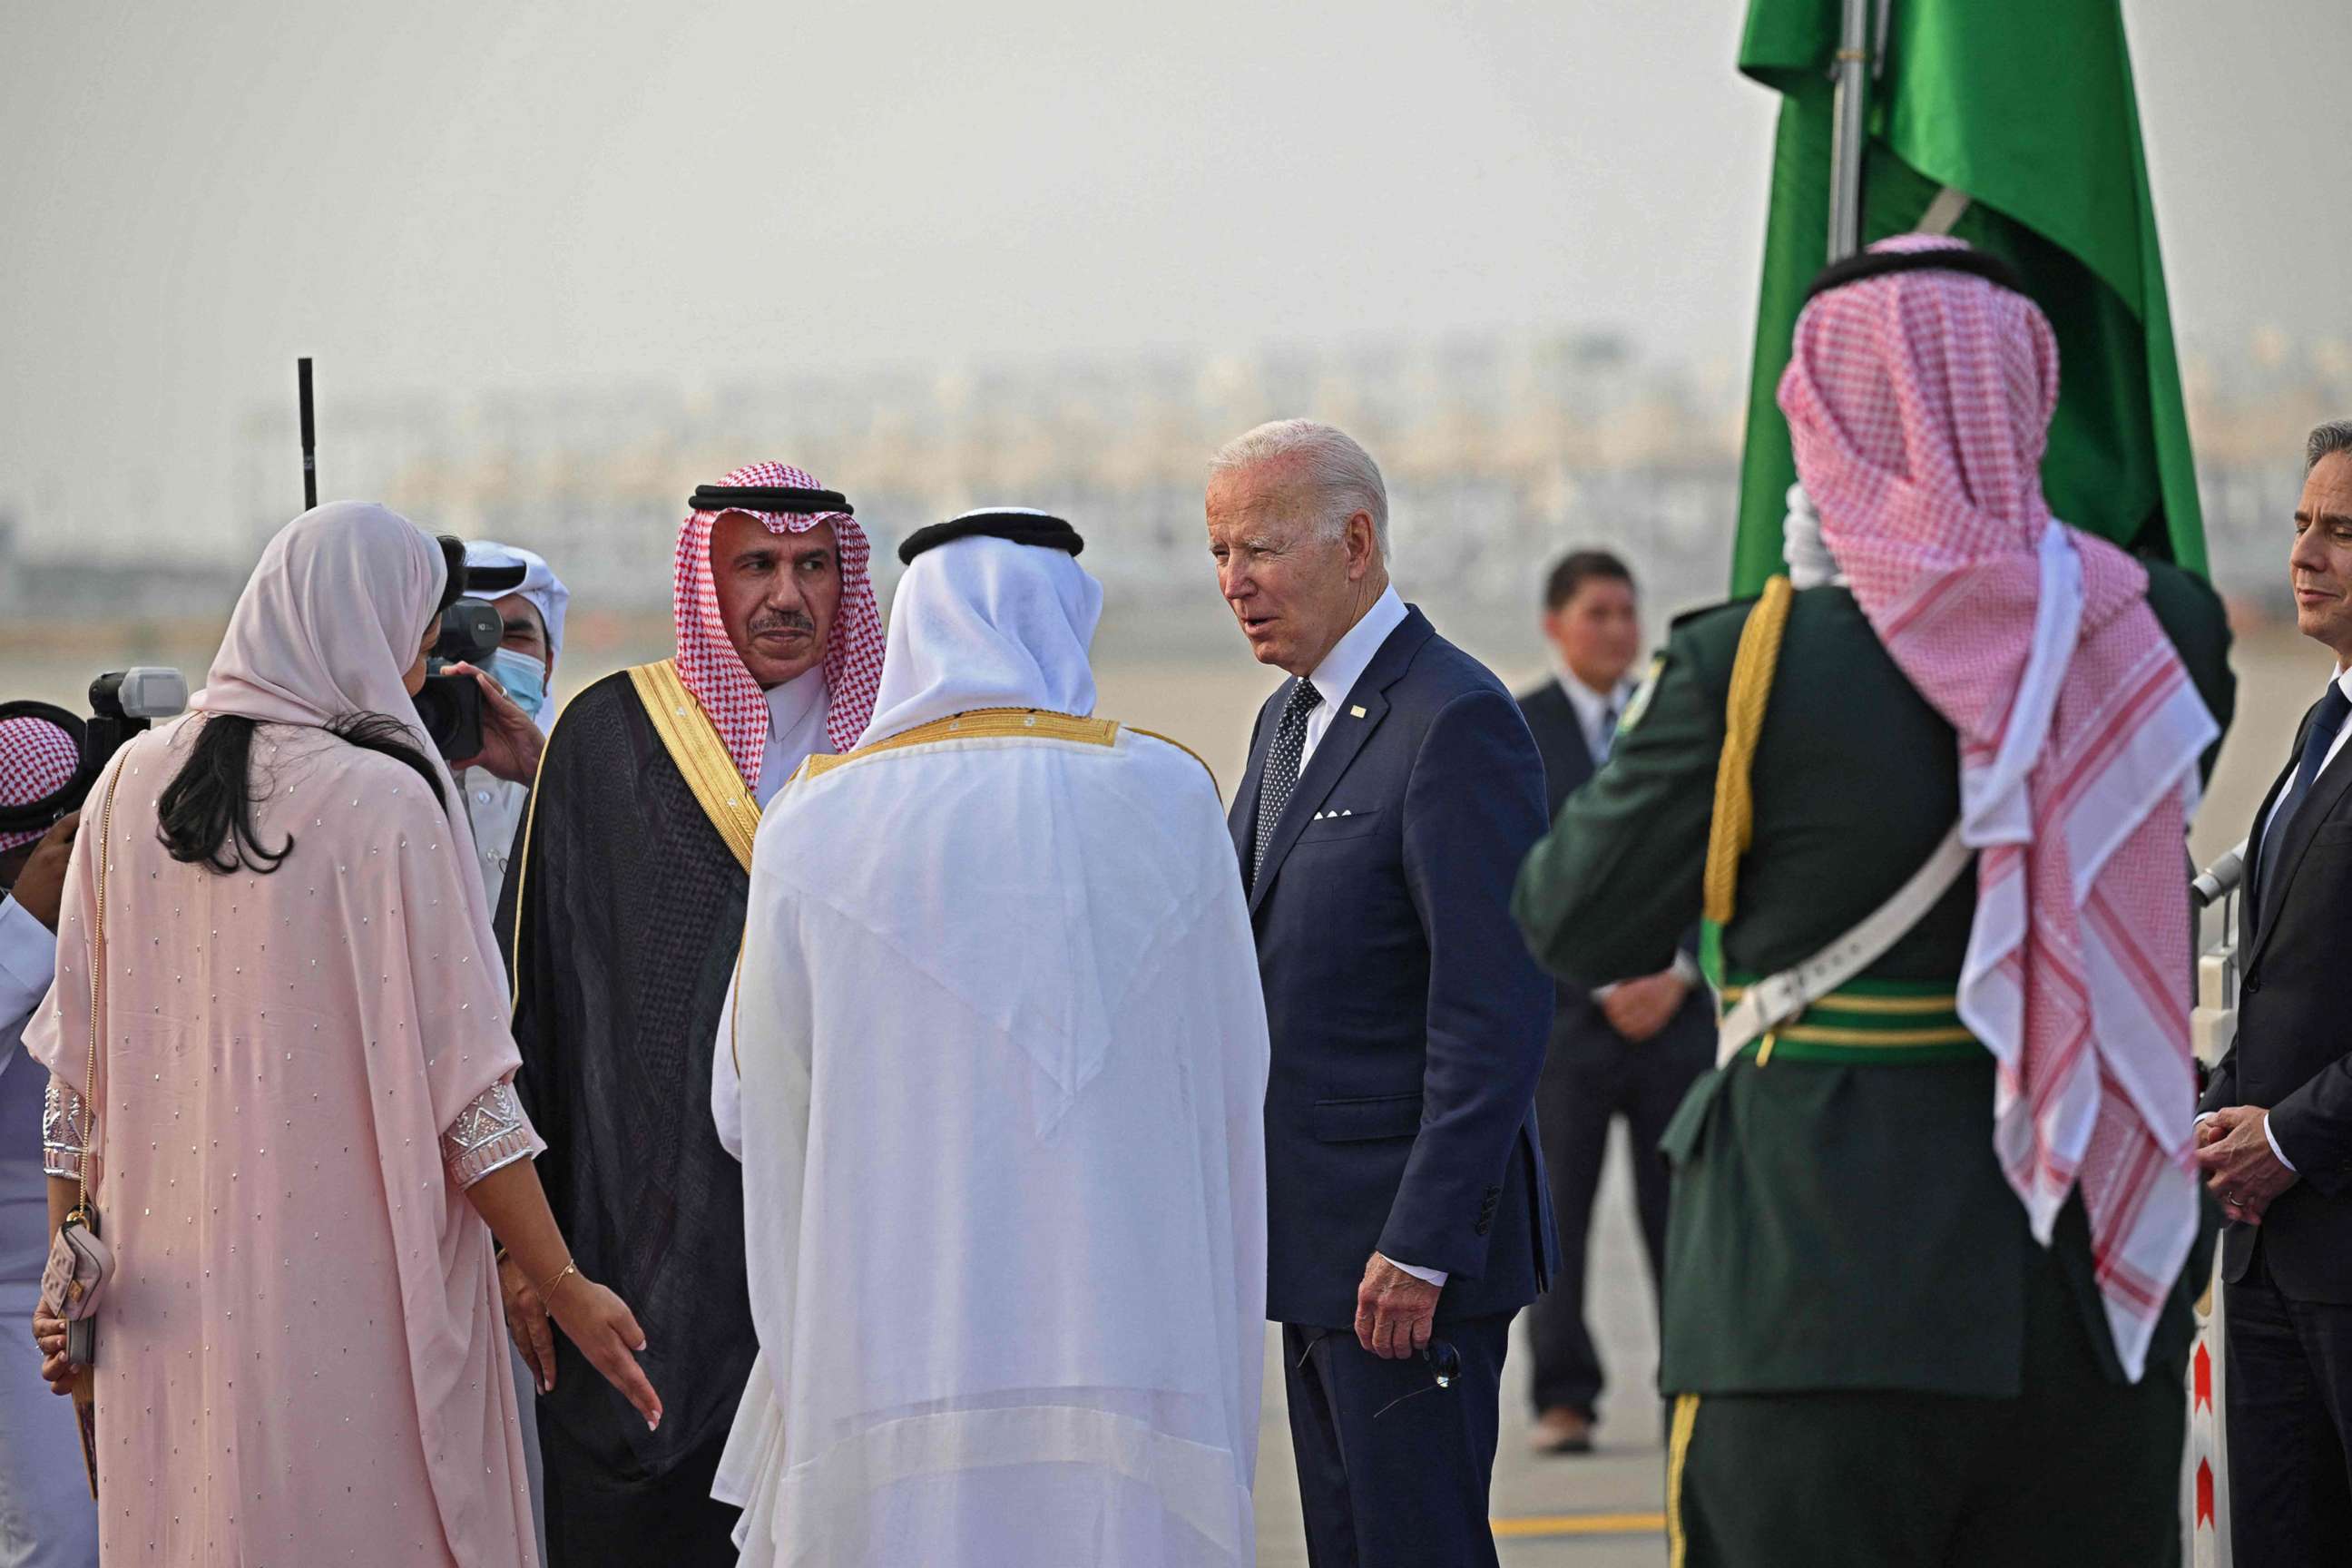 PHOTO: President Joe Biden is welcomed at the King Abdulaziz International Airport in the Saudi Arabian coastal city of Jeddah on July 15, 2022.